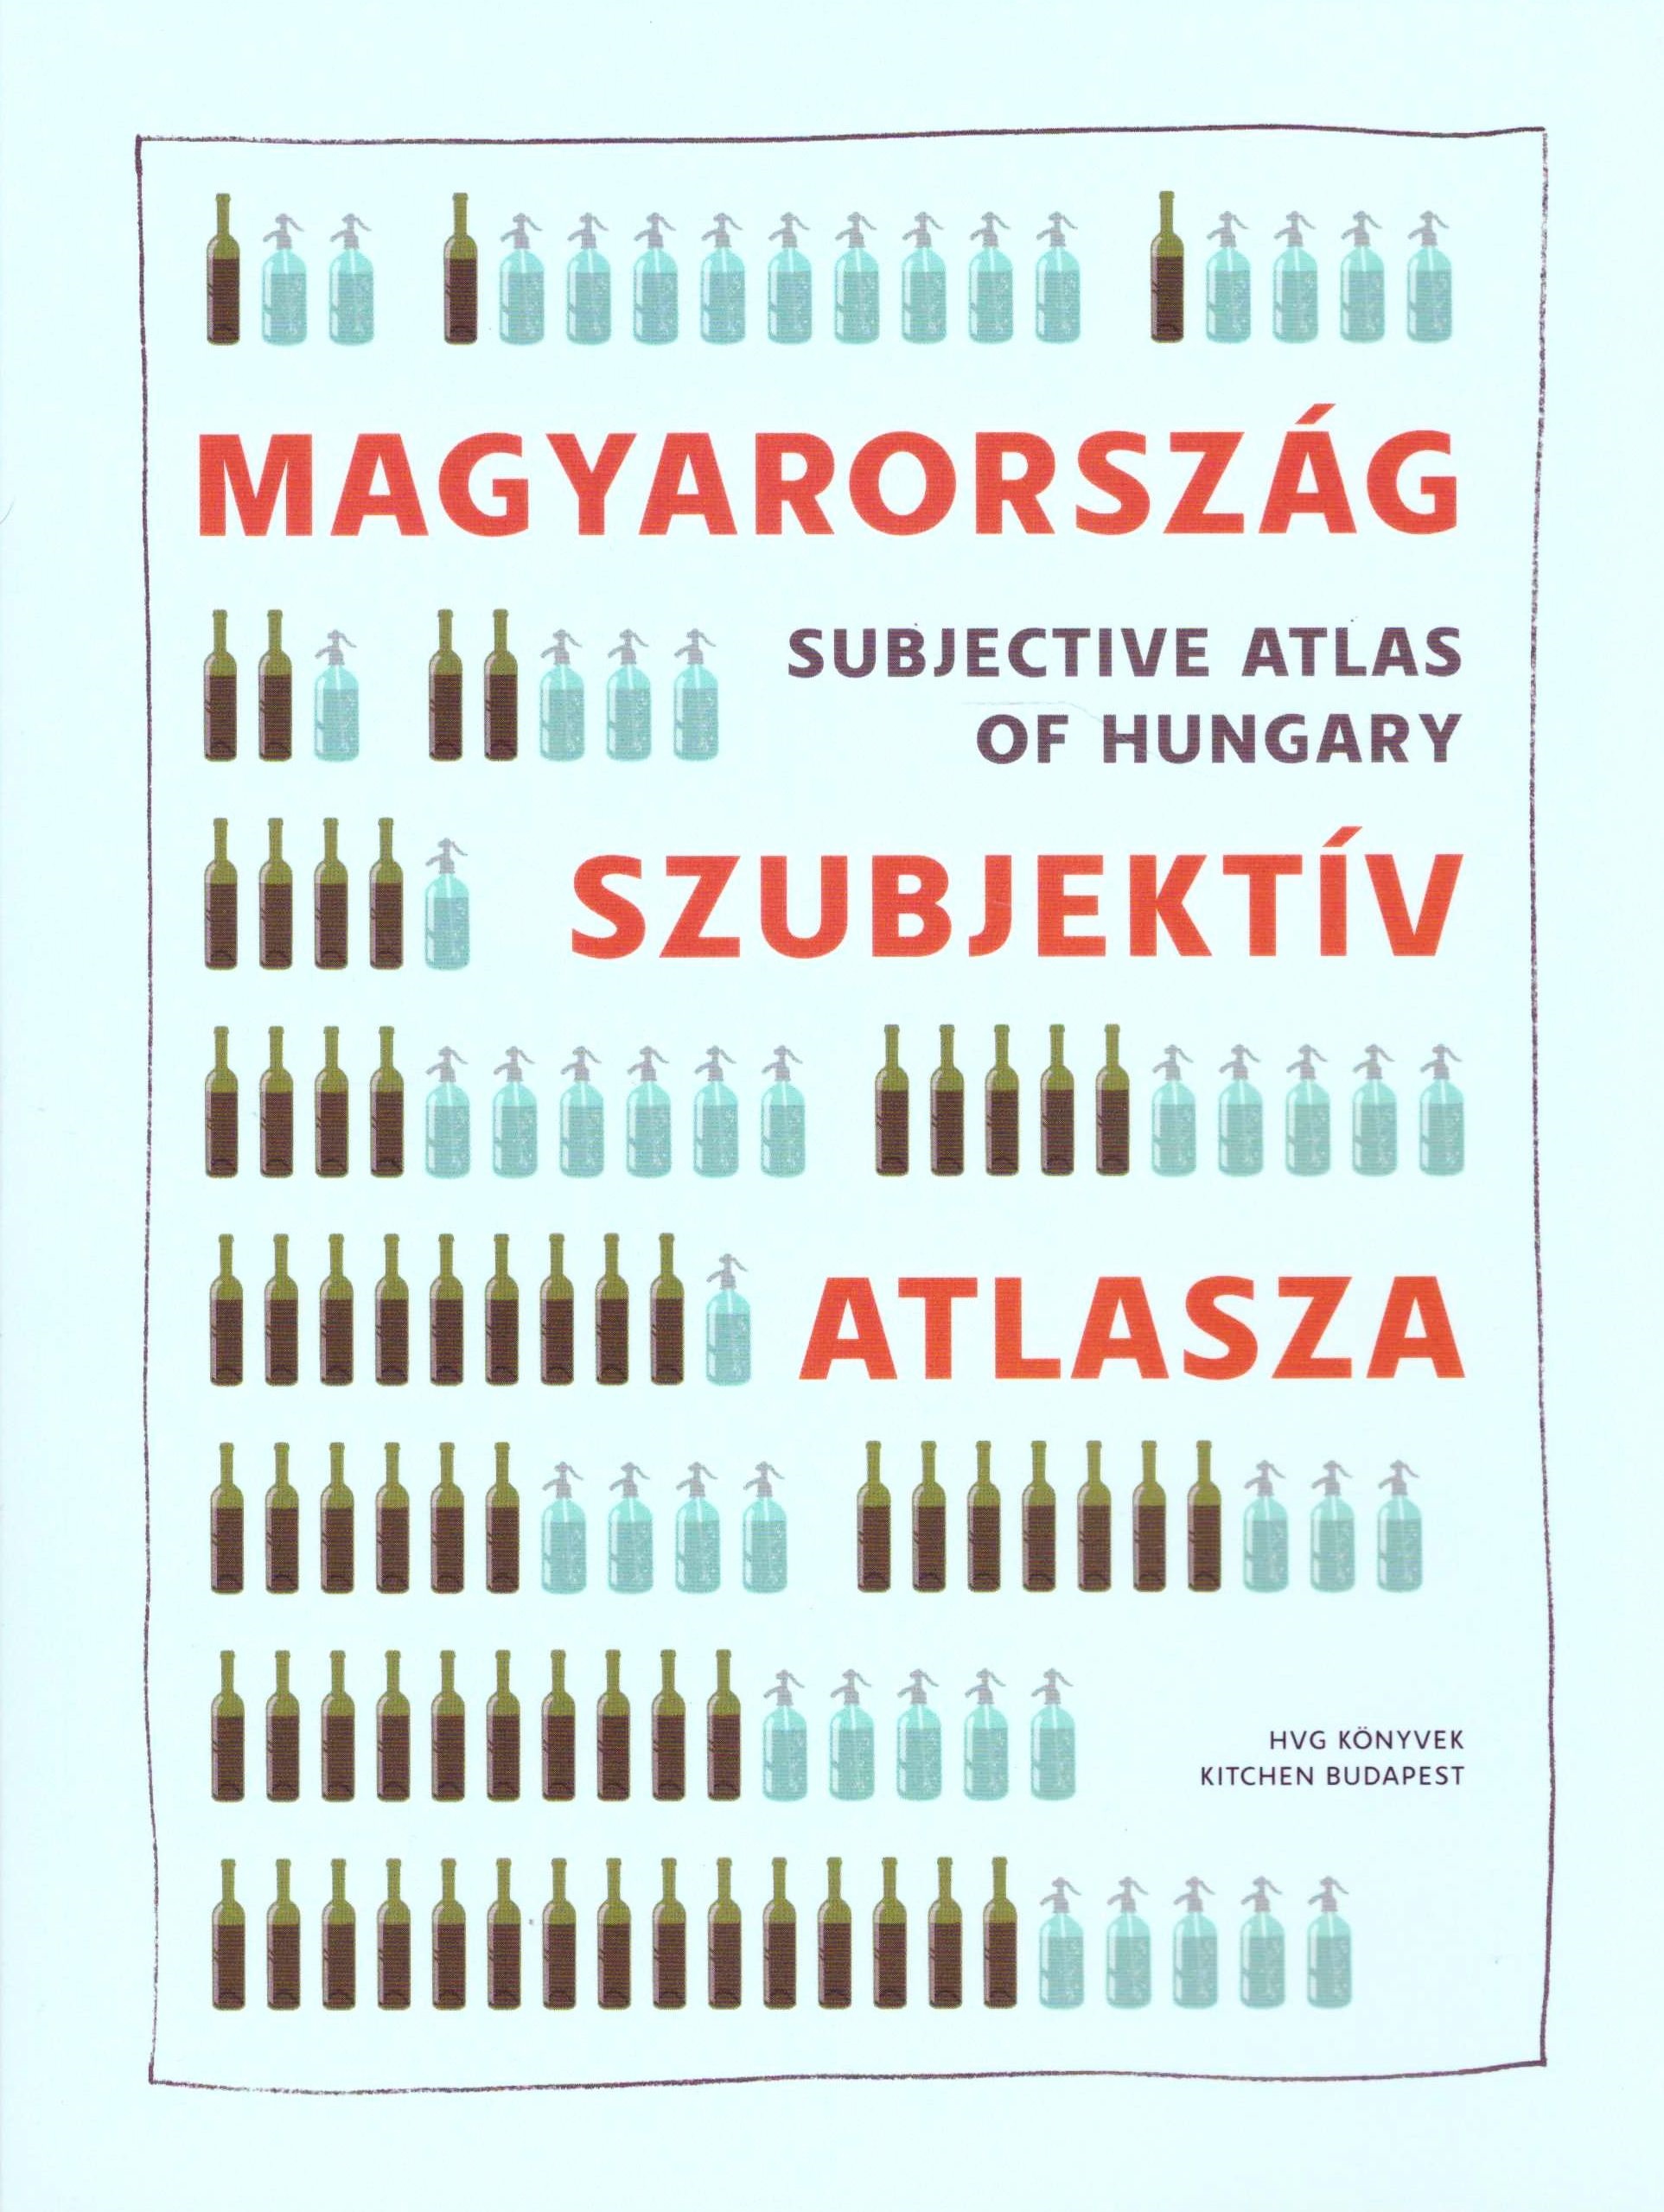 Magyarország szubjektív atlasza - Subjective Atlas of Hungary